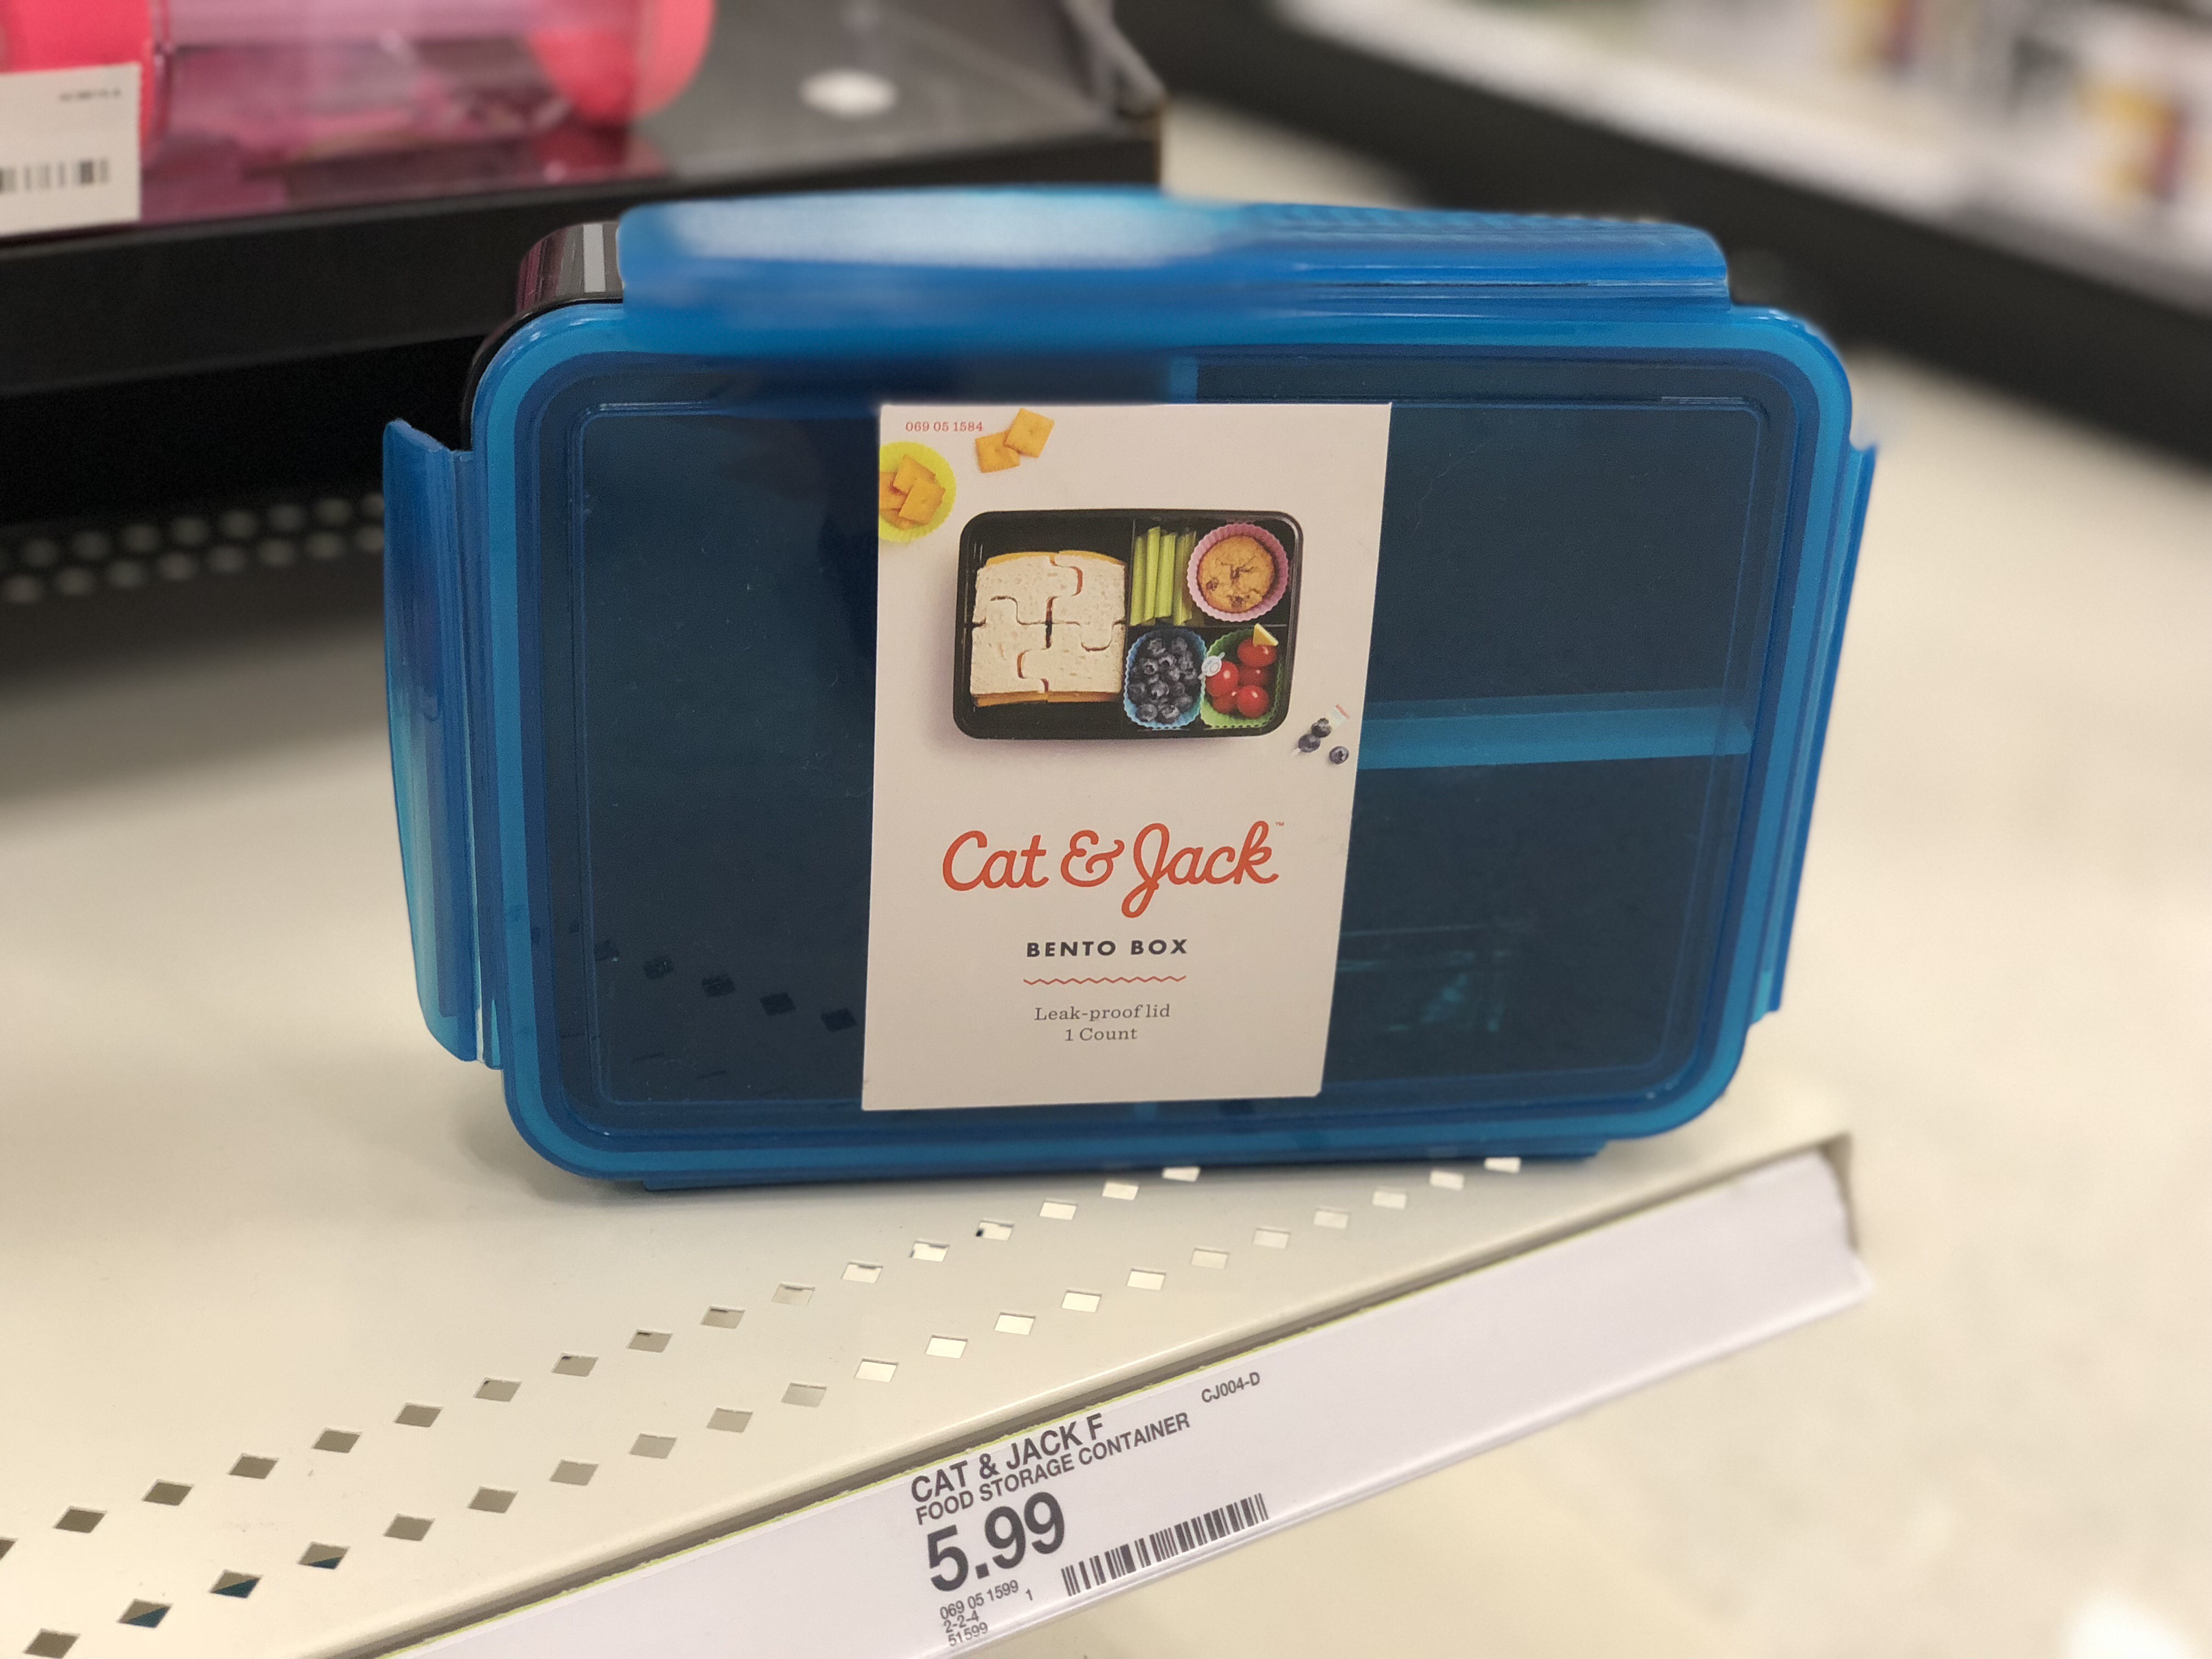 Cat & Jack Bento Box items at Target make lunches fun - cat & jack bento box